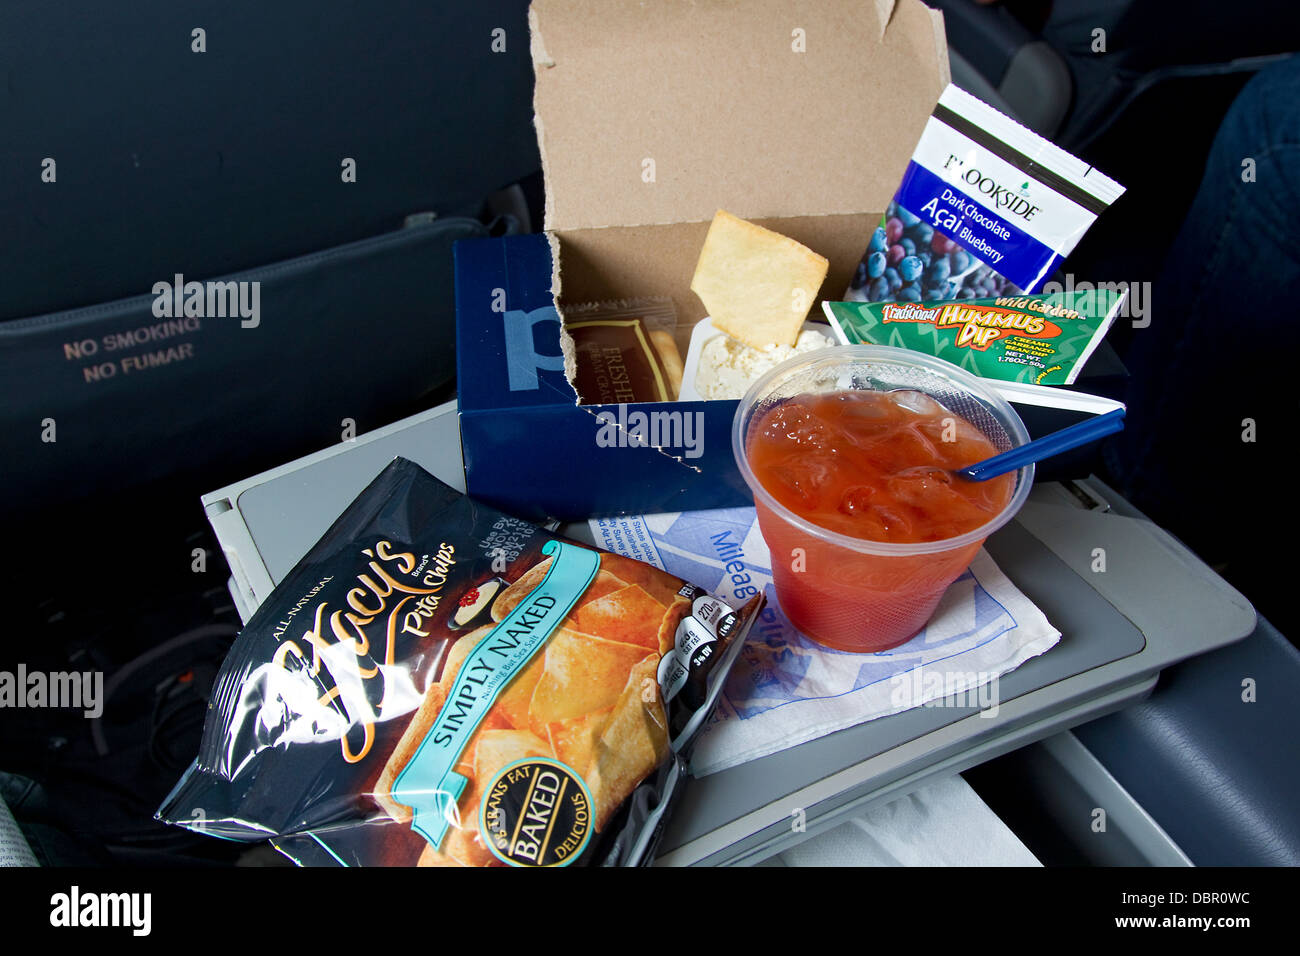 https://c8.alamy.com/comp/DBR0WC/airplane-snack-food-on-first-class-flight-DBR0WC.jpg